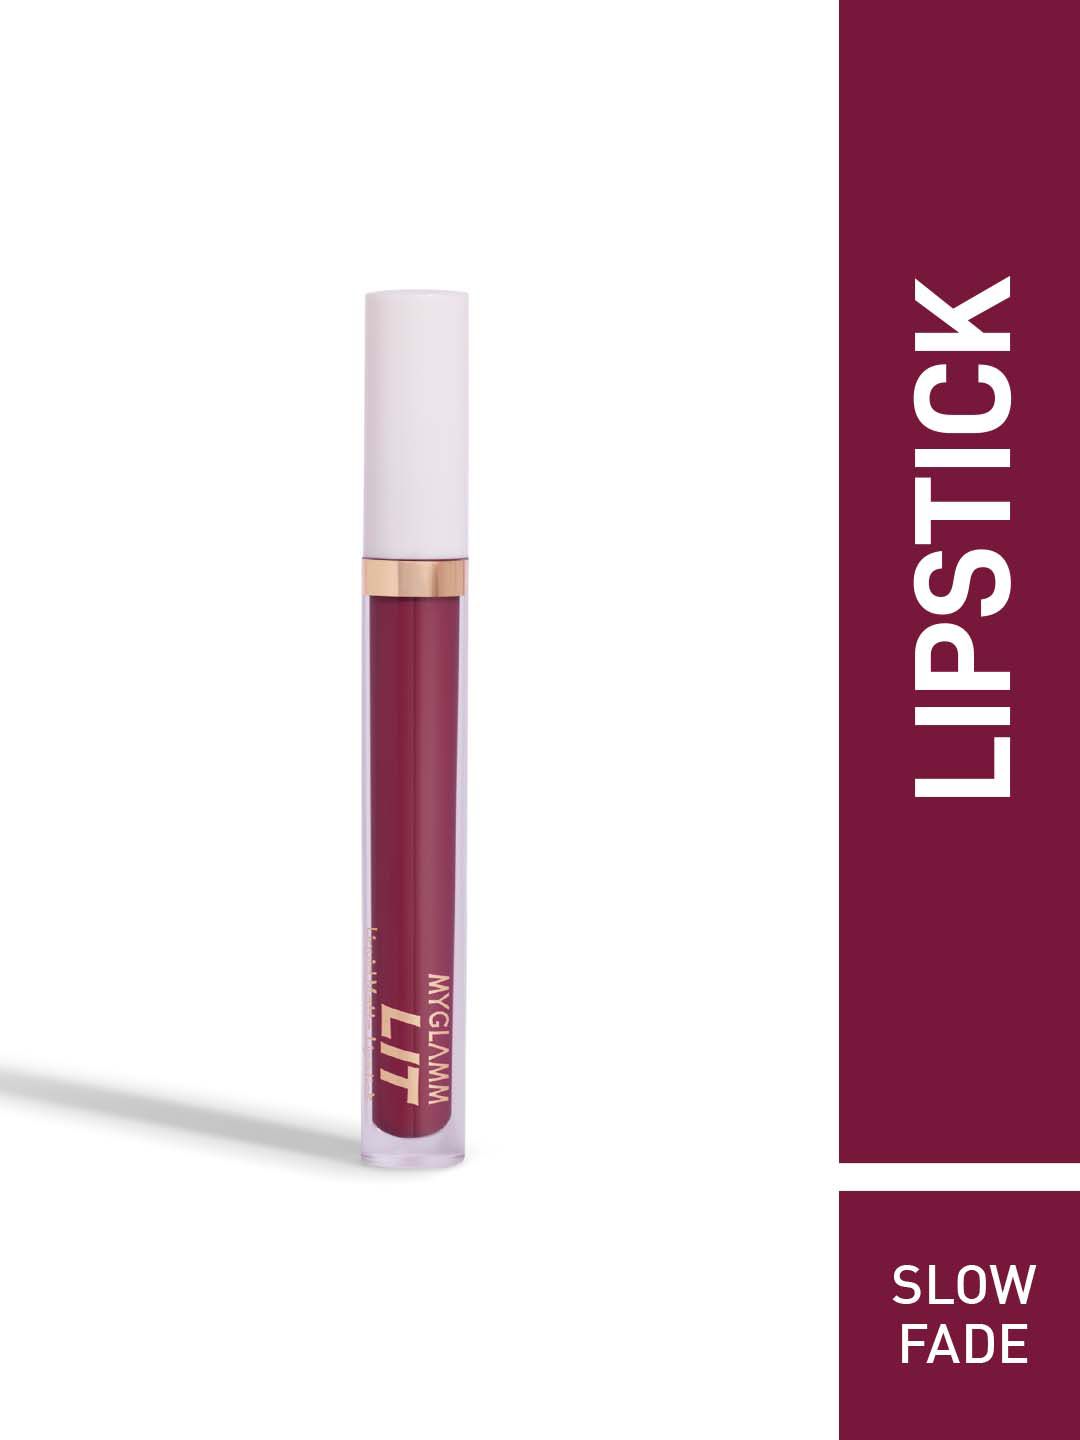 MyGlamm LIT Liquid Matte Lipstick 3 ml - Slow Fade Price in India